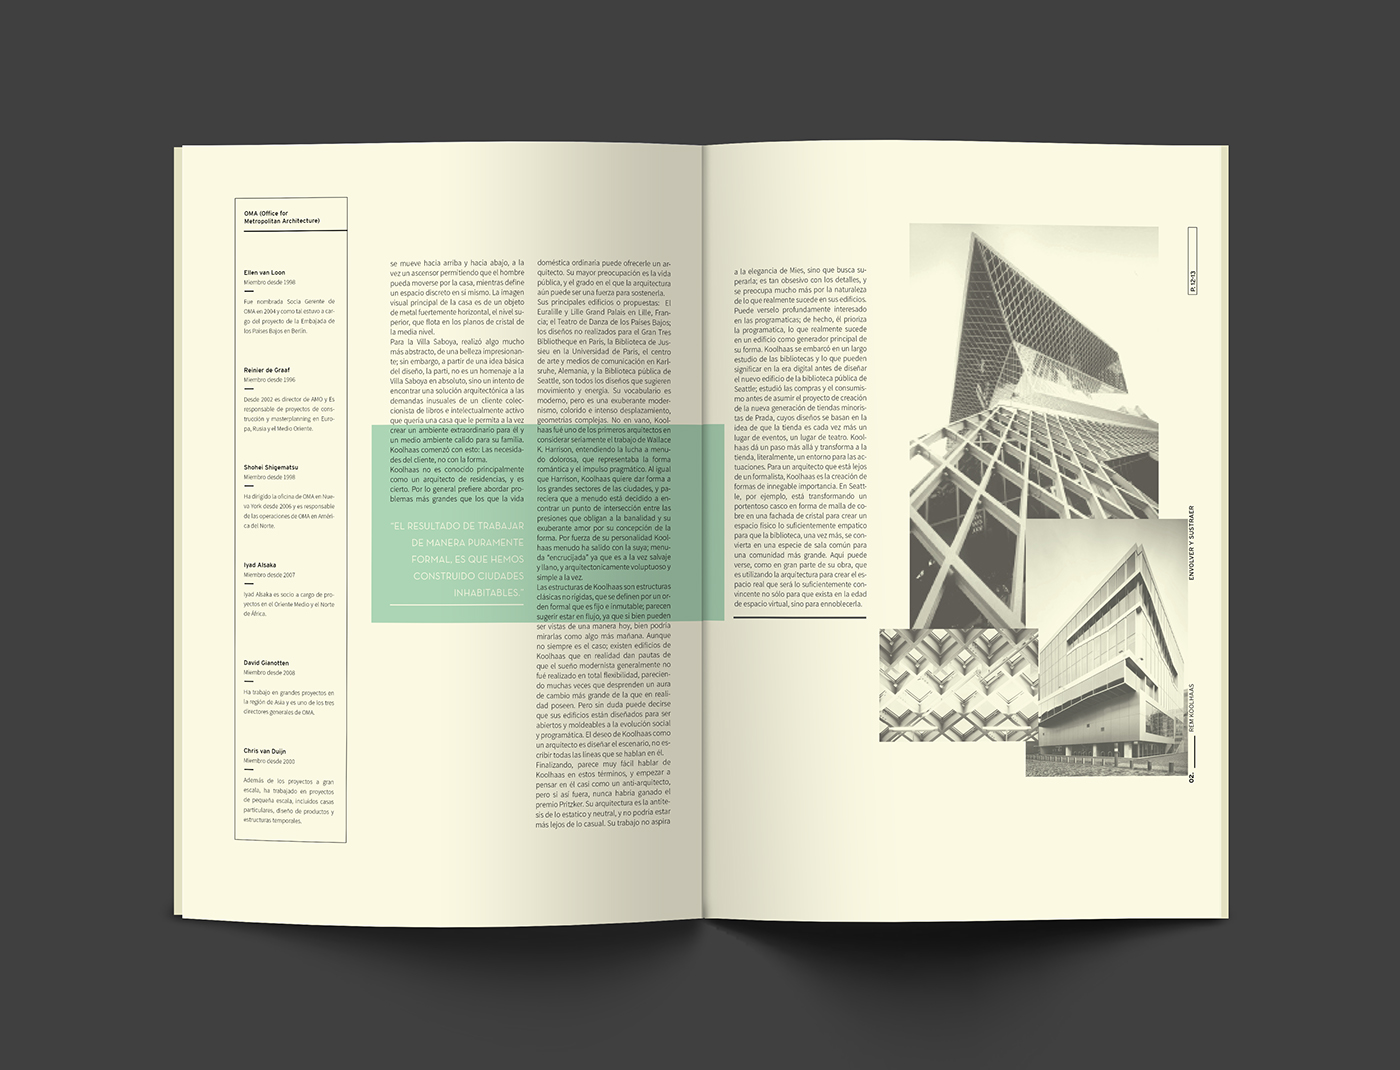 Hacedores de Mundo rem koolhaas fadu catedra gabriele editorial uba architecture PressBook revista